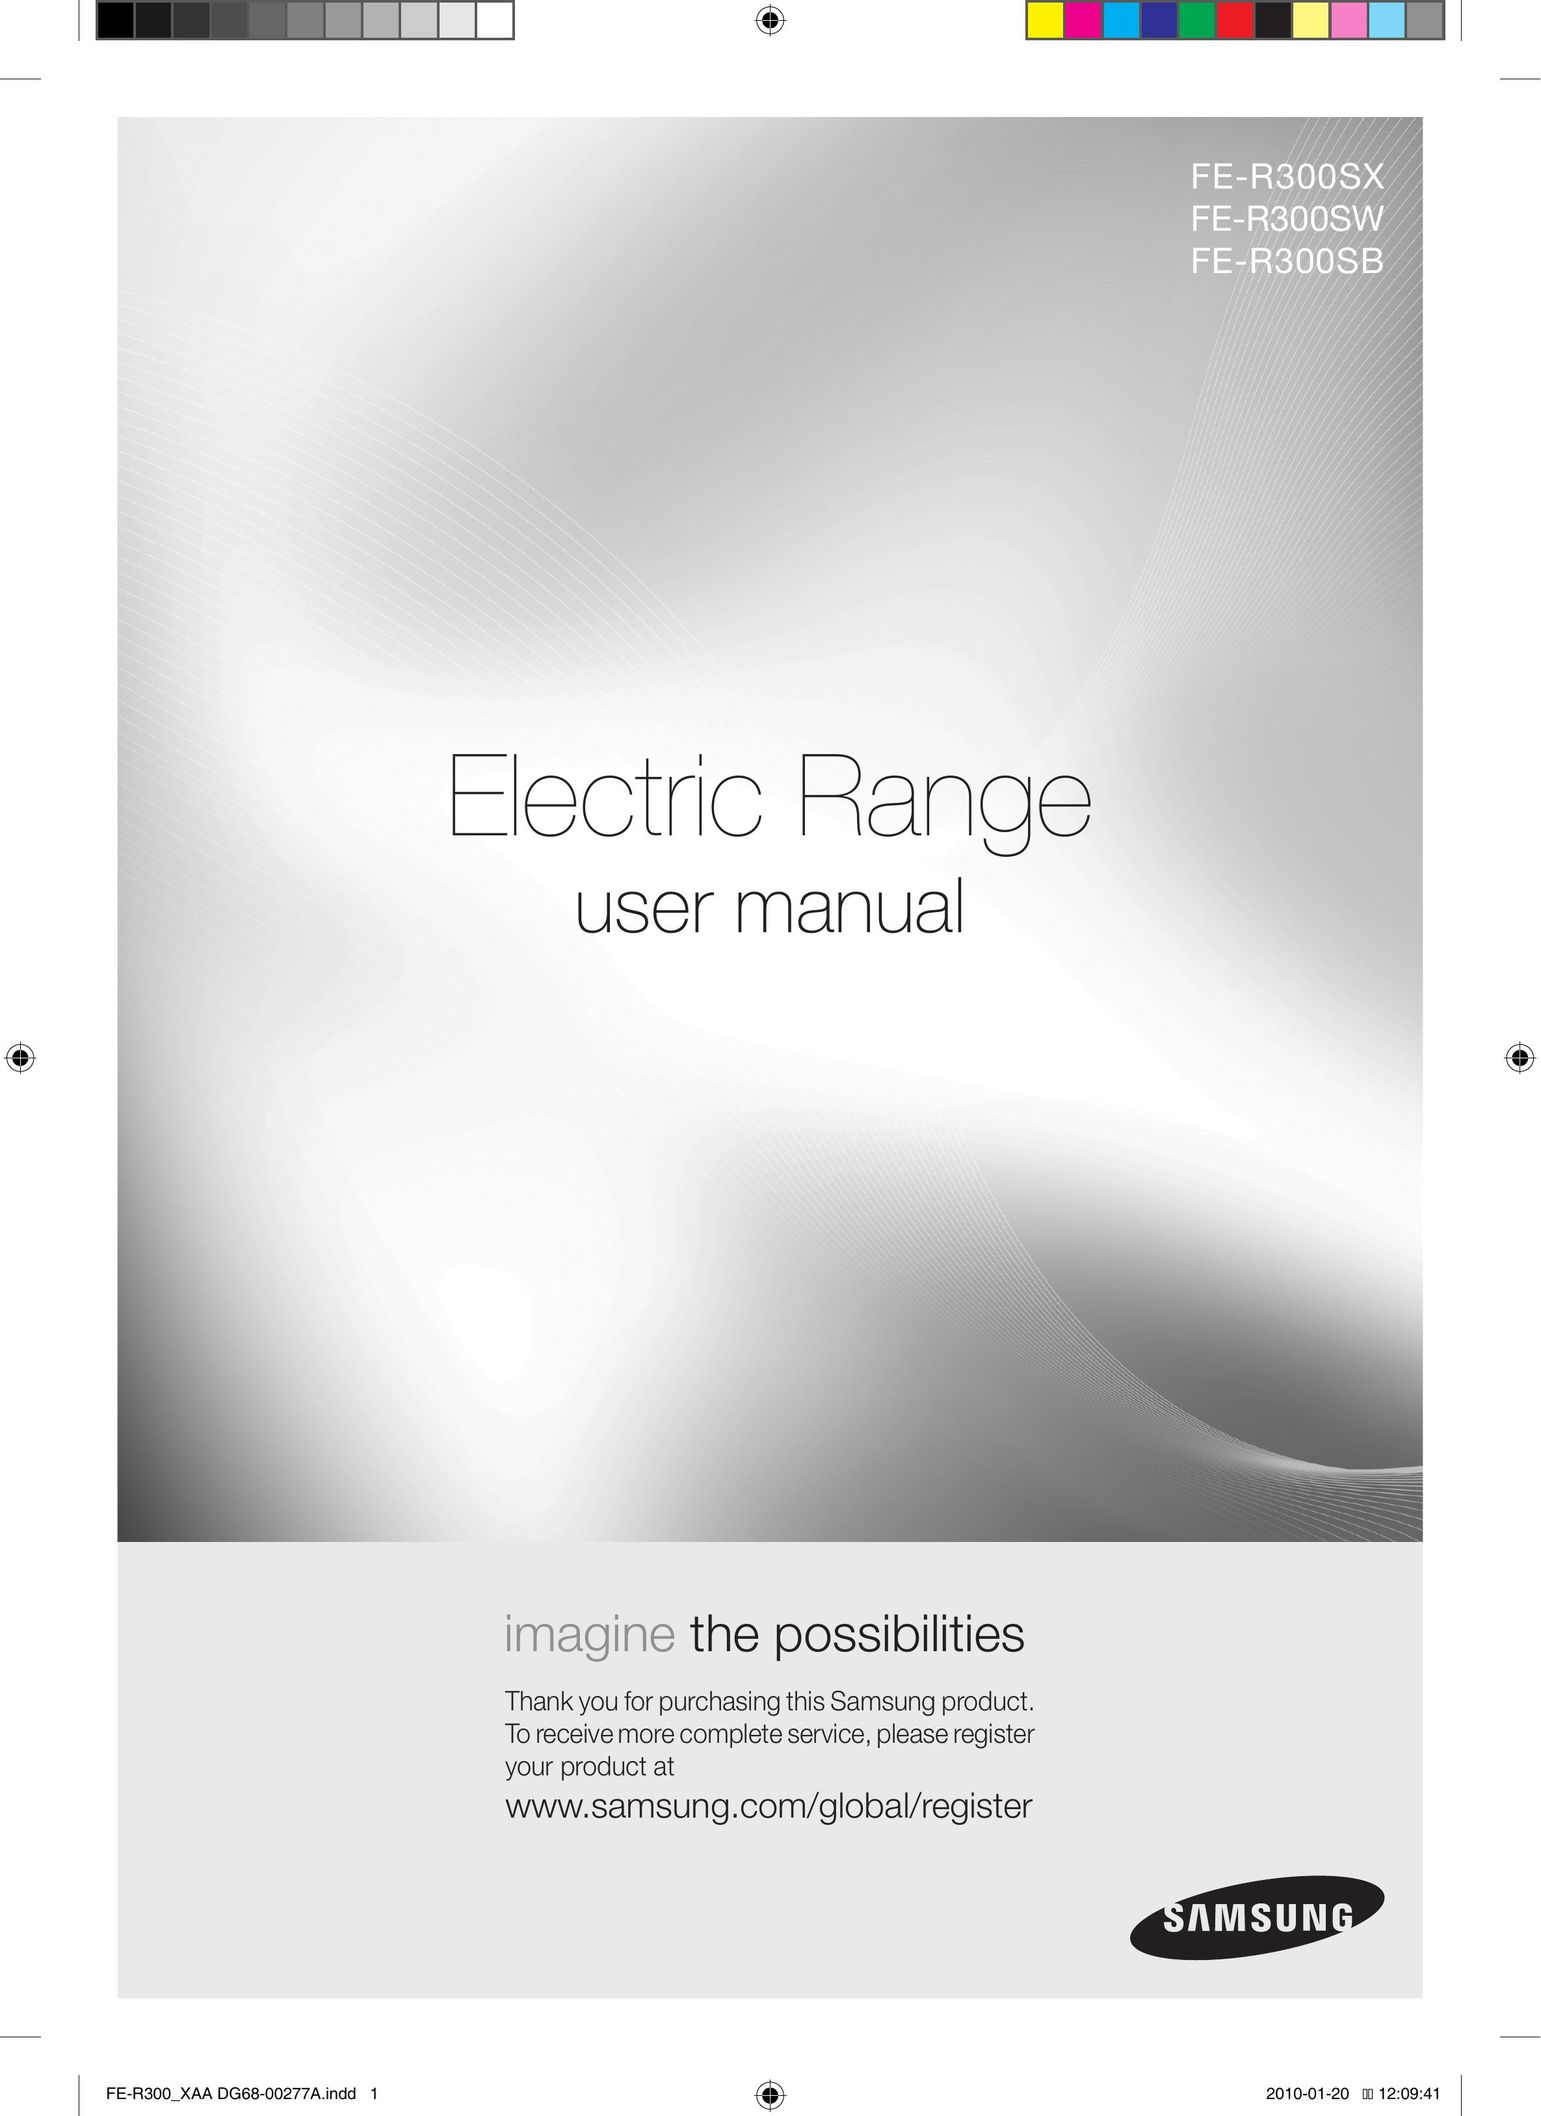 Samsung FE-R300SB Range User Manual